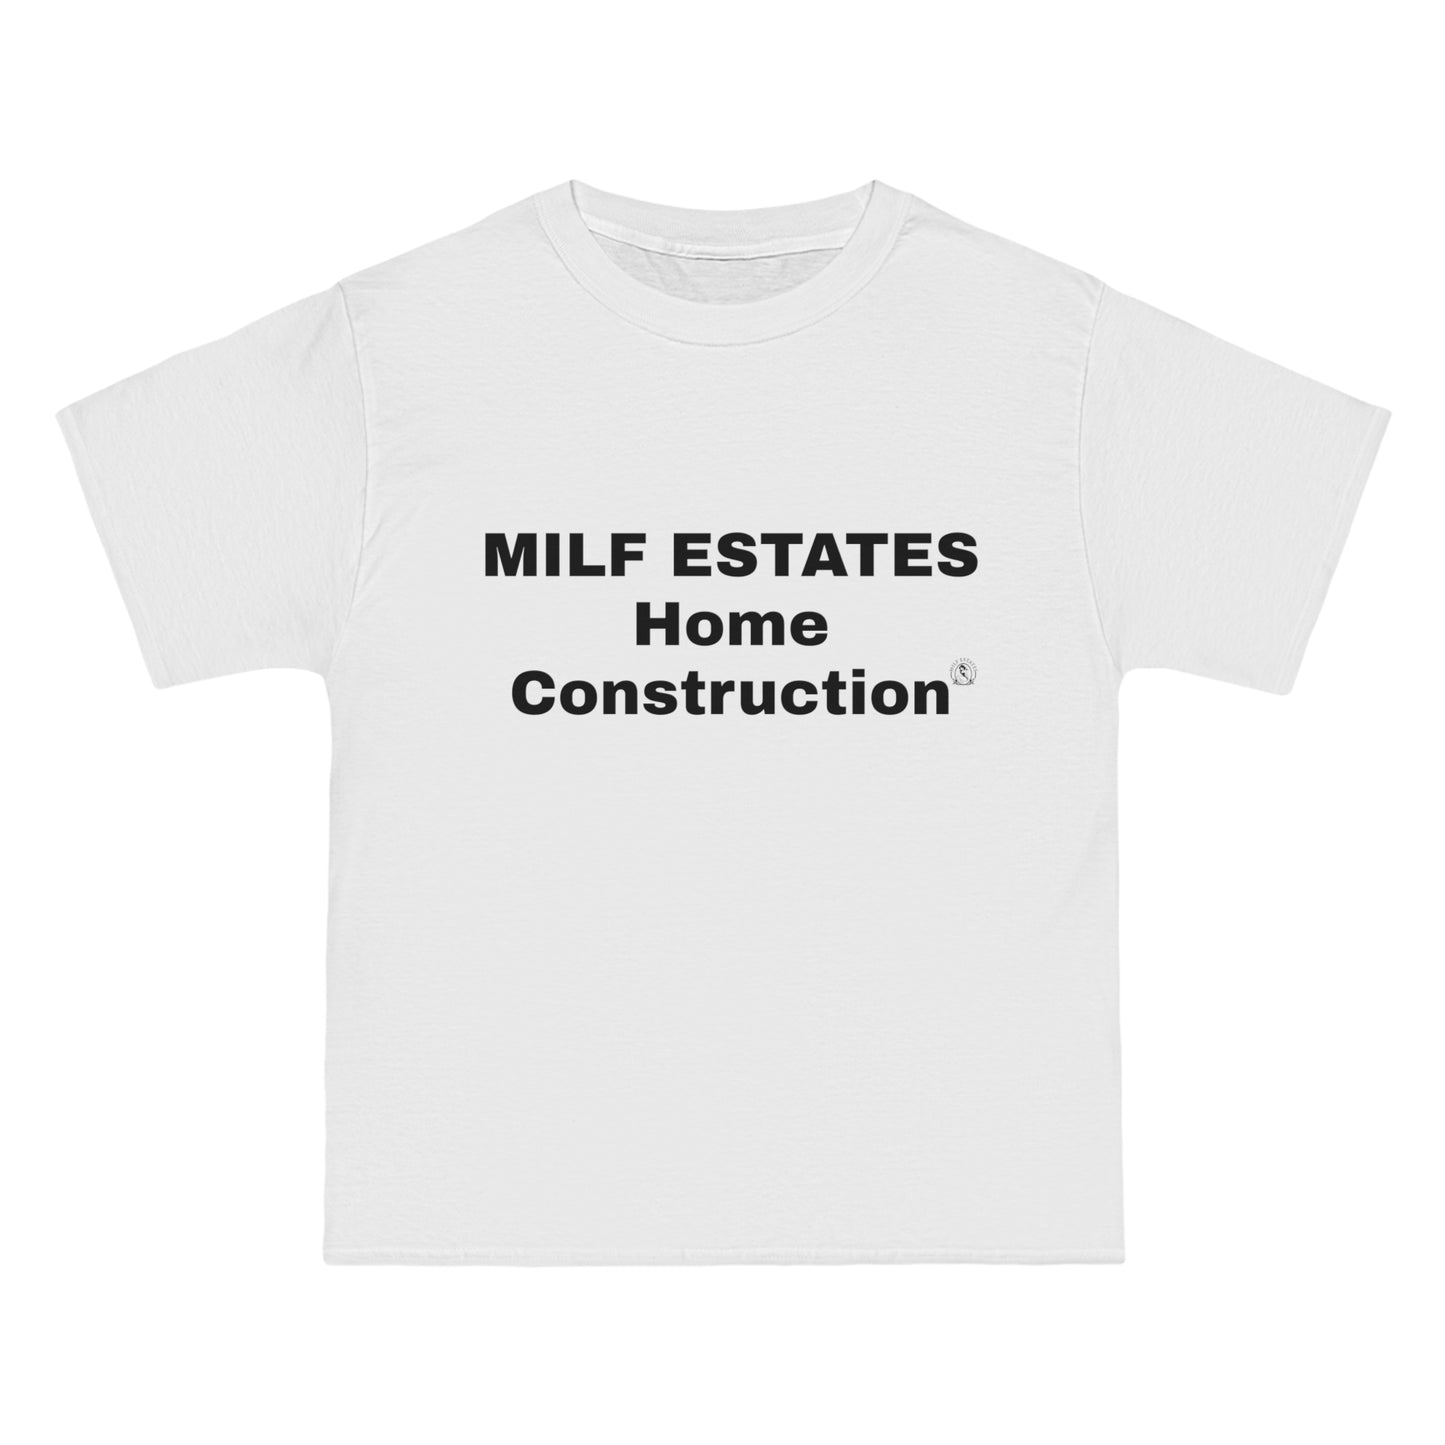 MILF ESTATES Home Construction